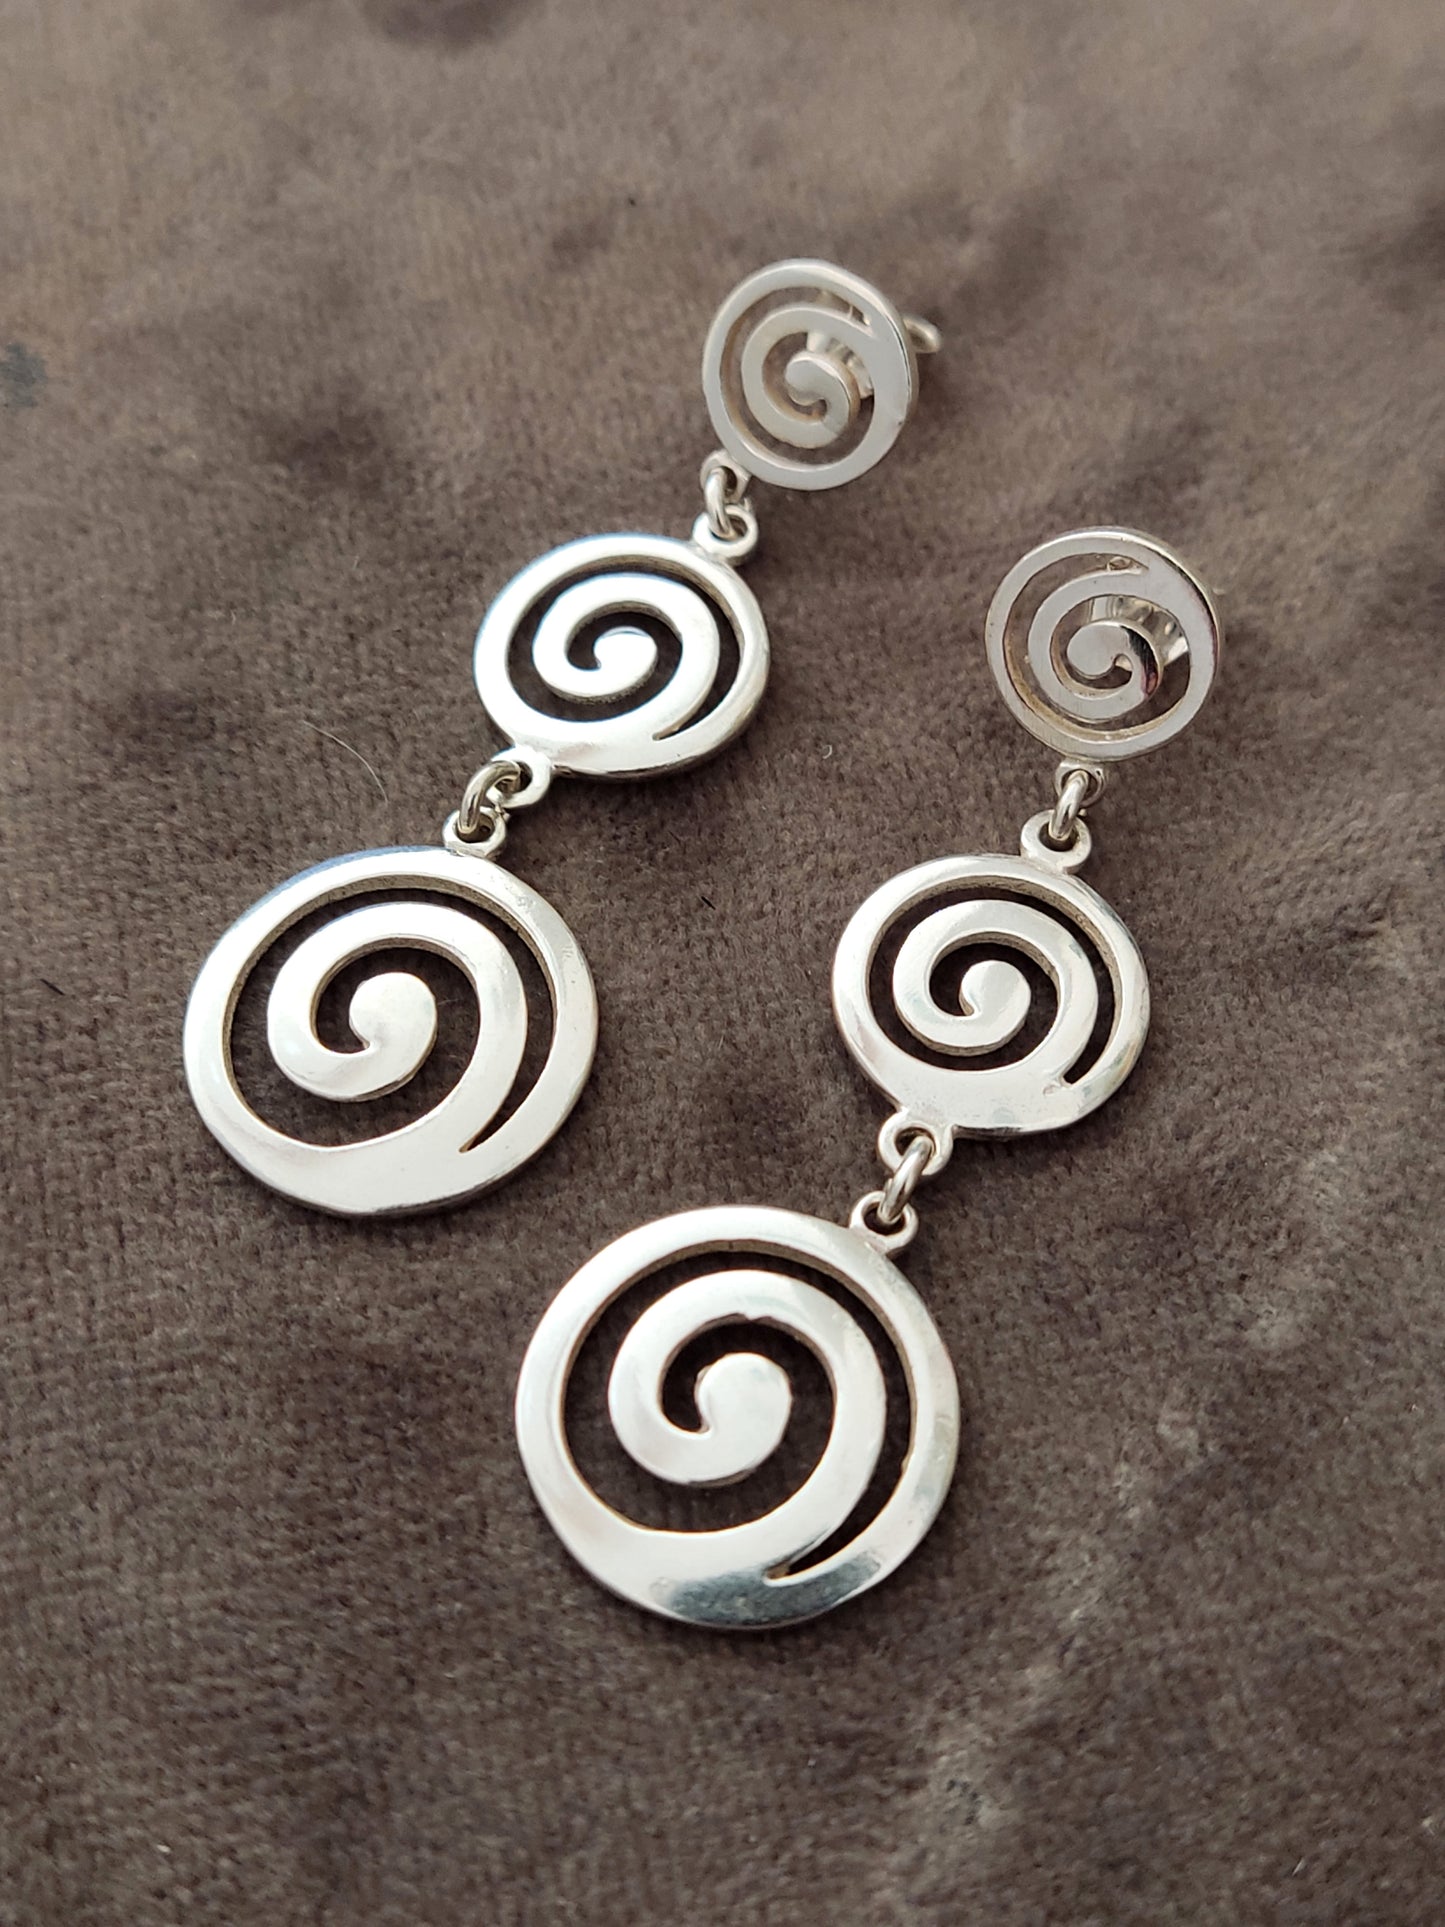 Greek silver dangle earrings with a triple spiral design on gray velvet.